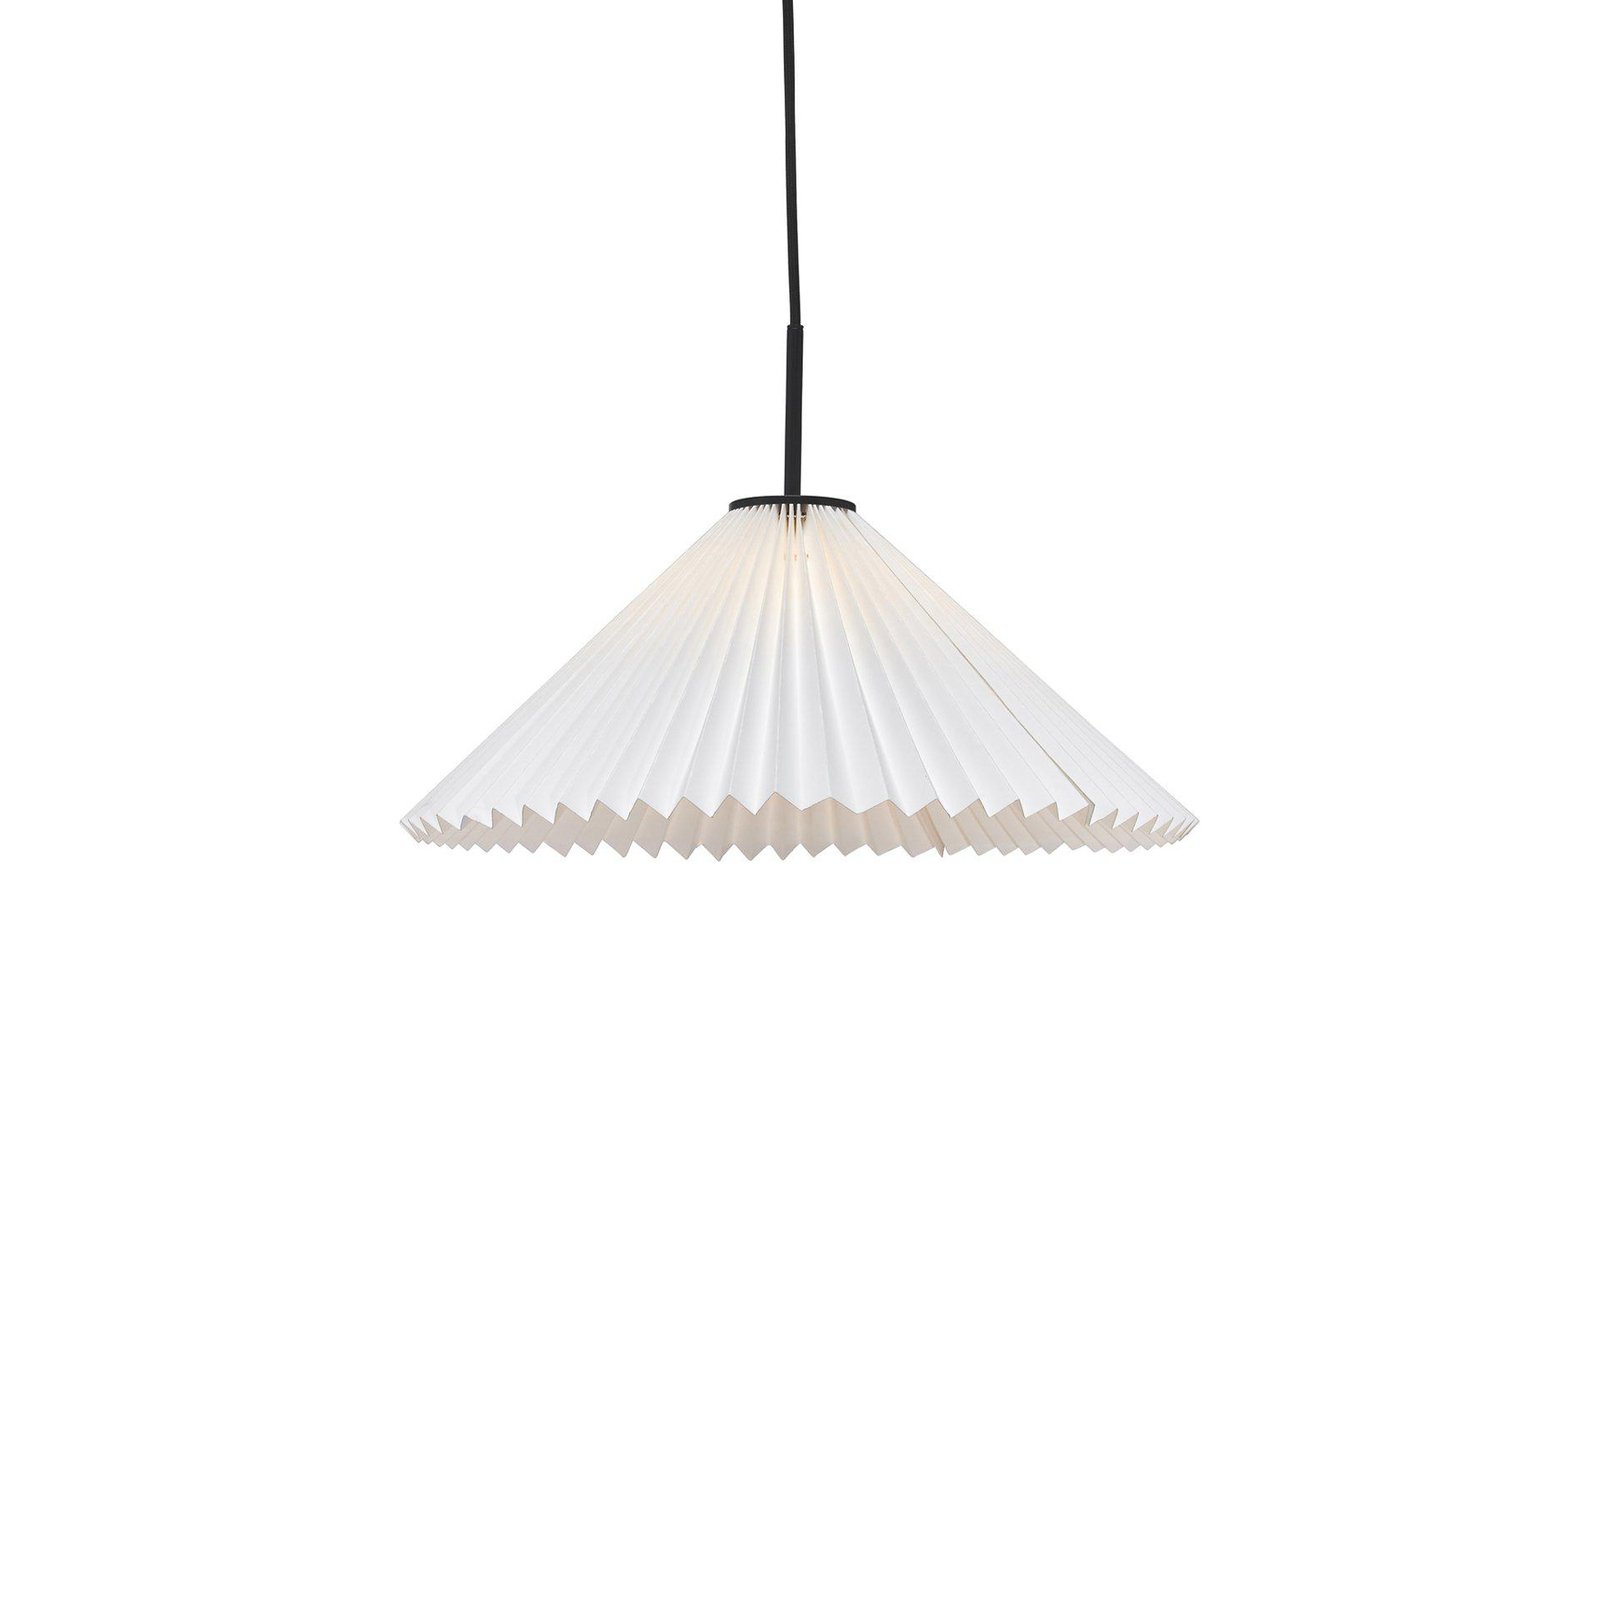 PR Home hanglamp Polly, wit, Ø 45 cm, papier